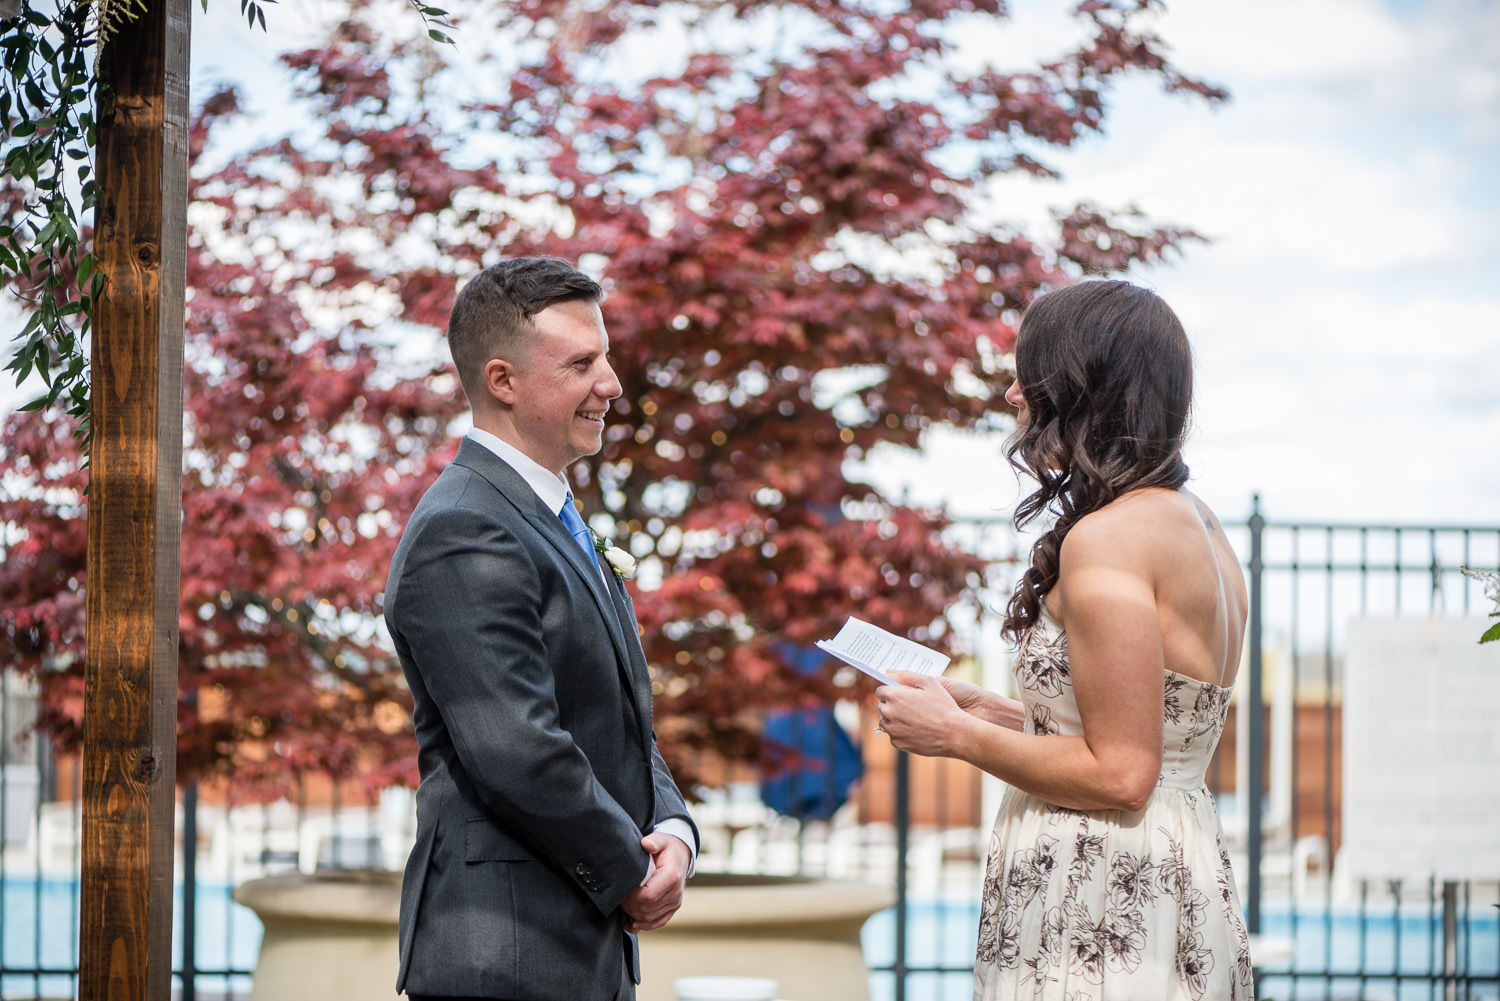 outdoor ceremony at surprise rooftop wedding in midtown atlanta